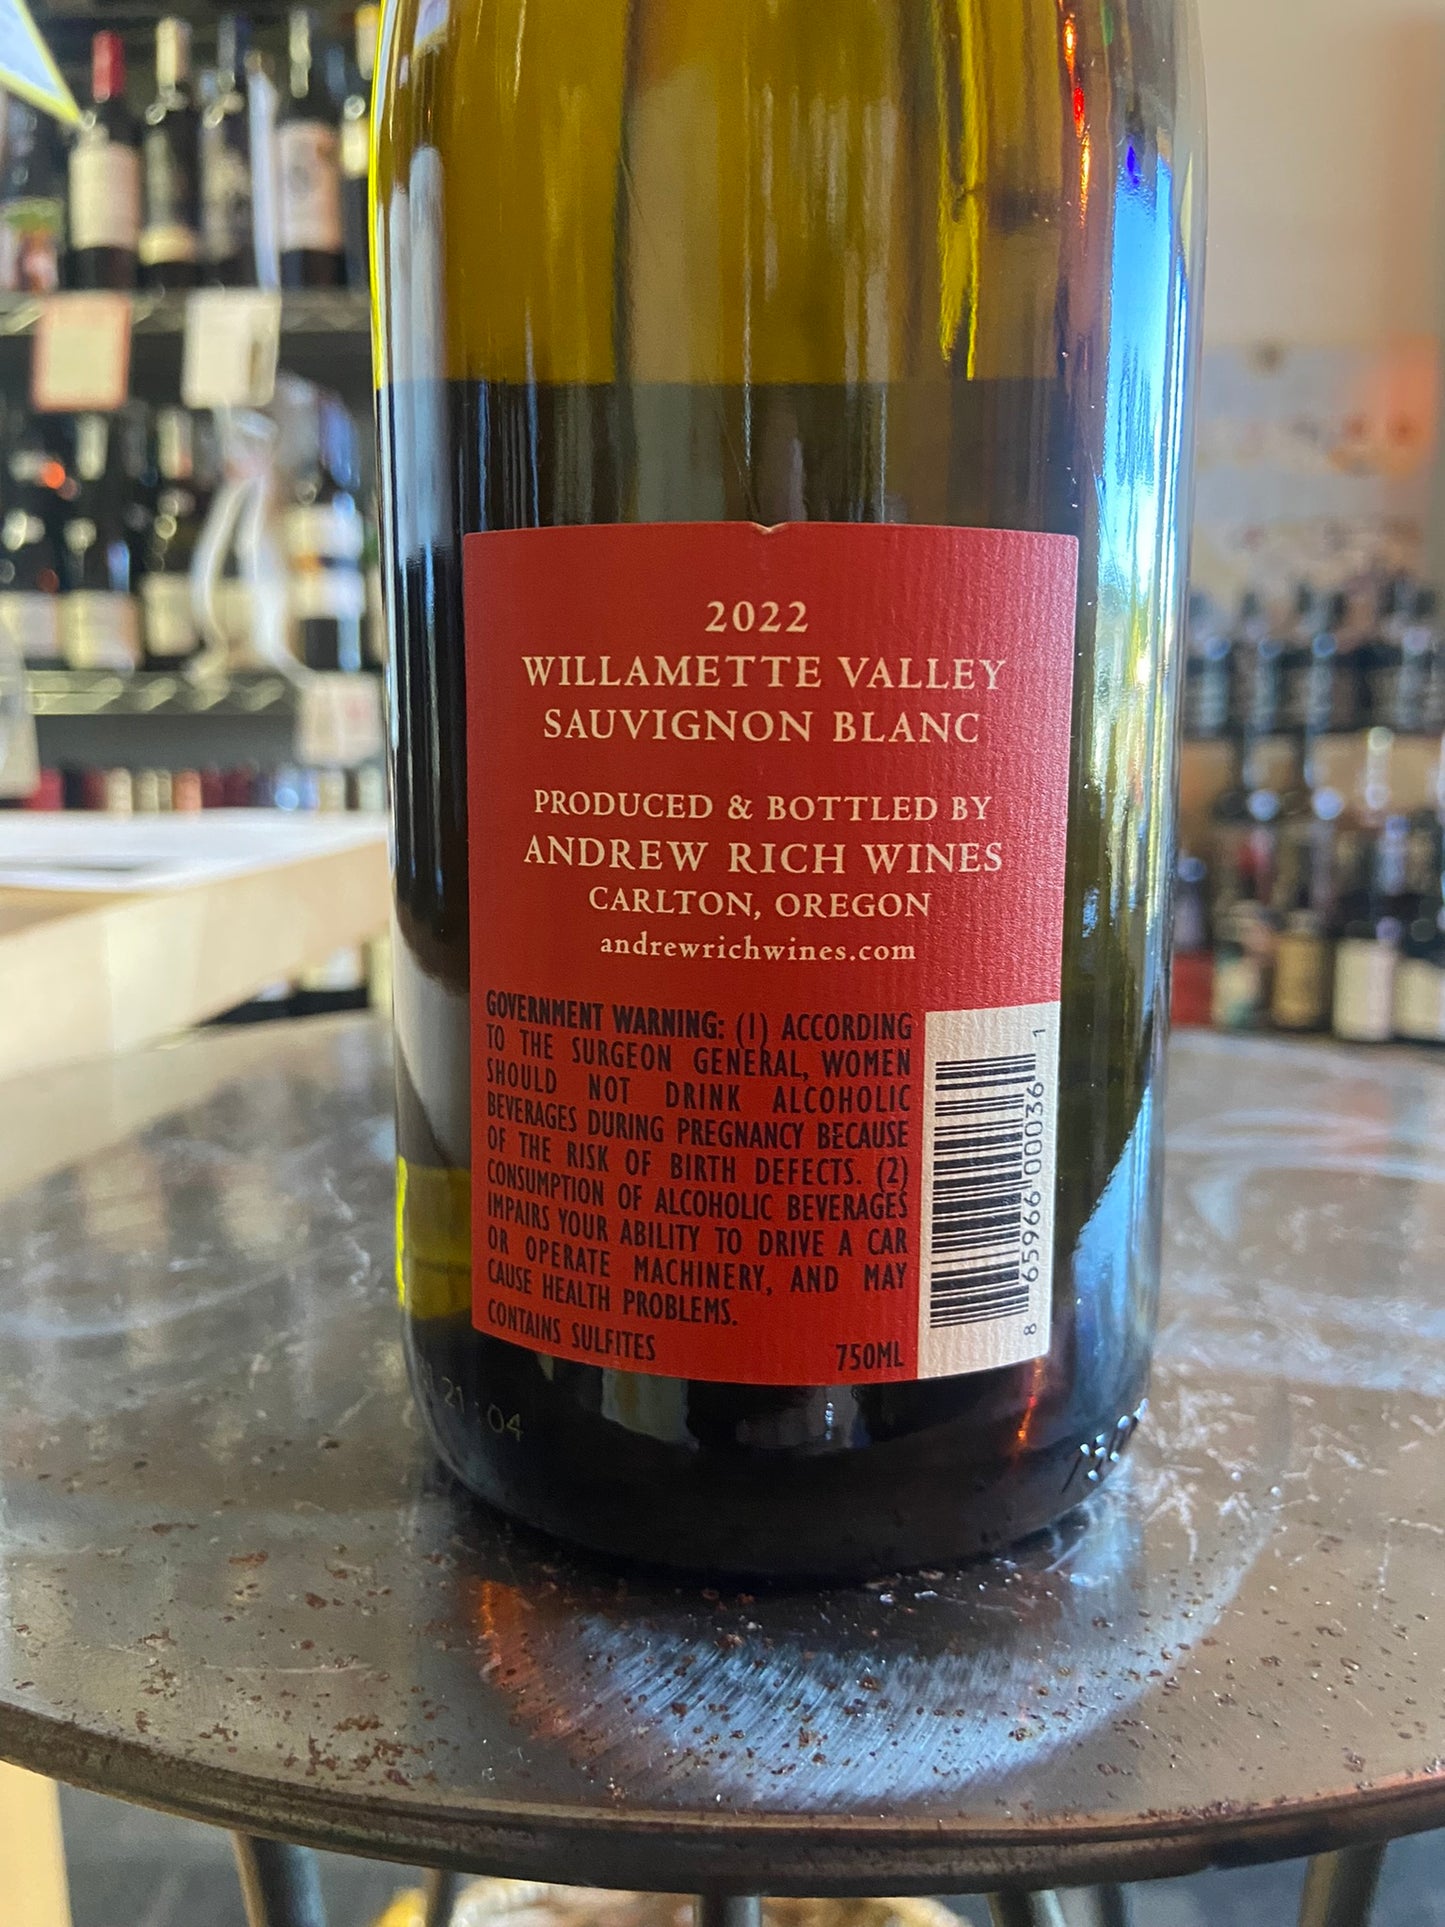 ANDREW RICH VINTNER 2022 Sauvignon Blanc (Willamette Valley, OR)